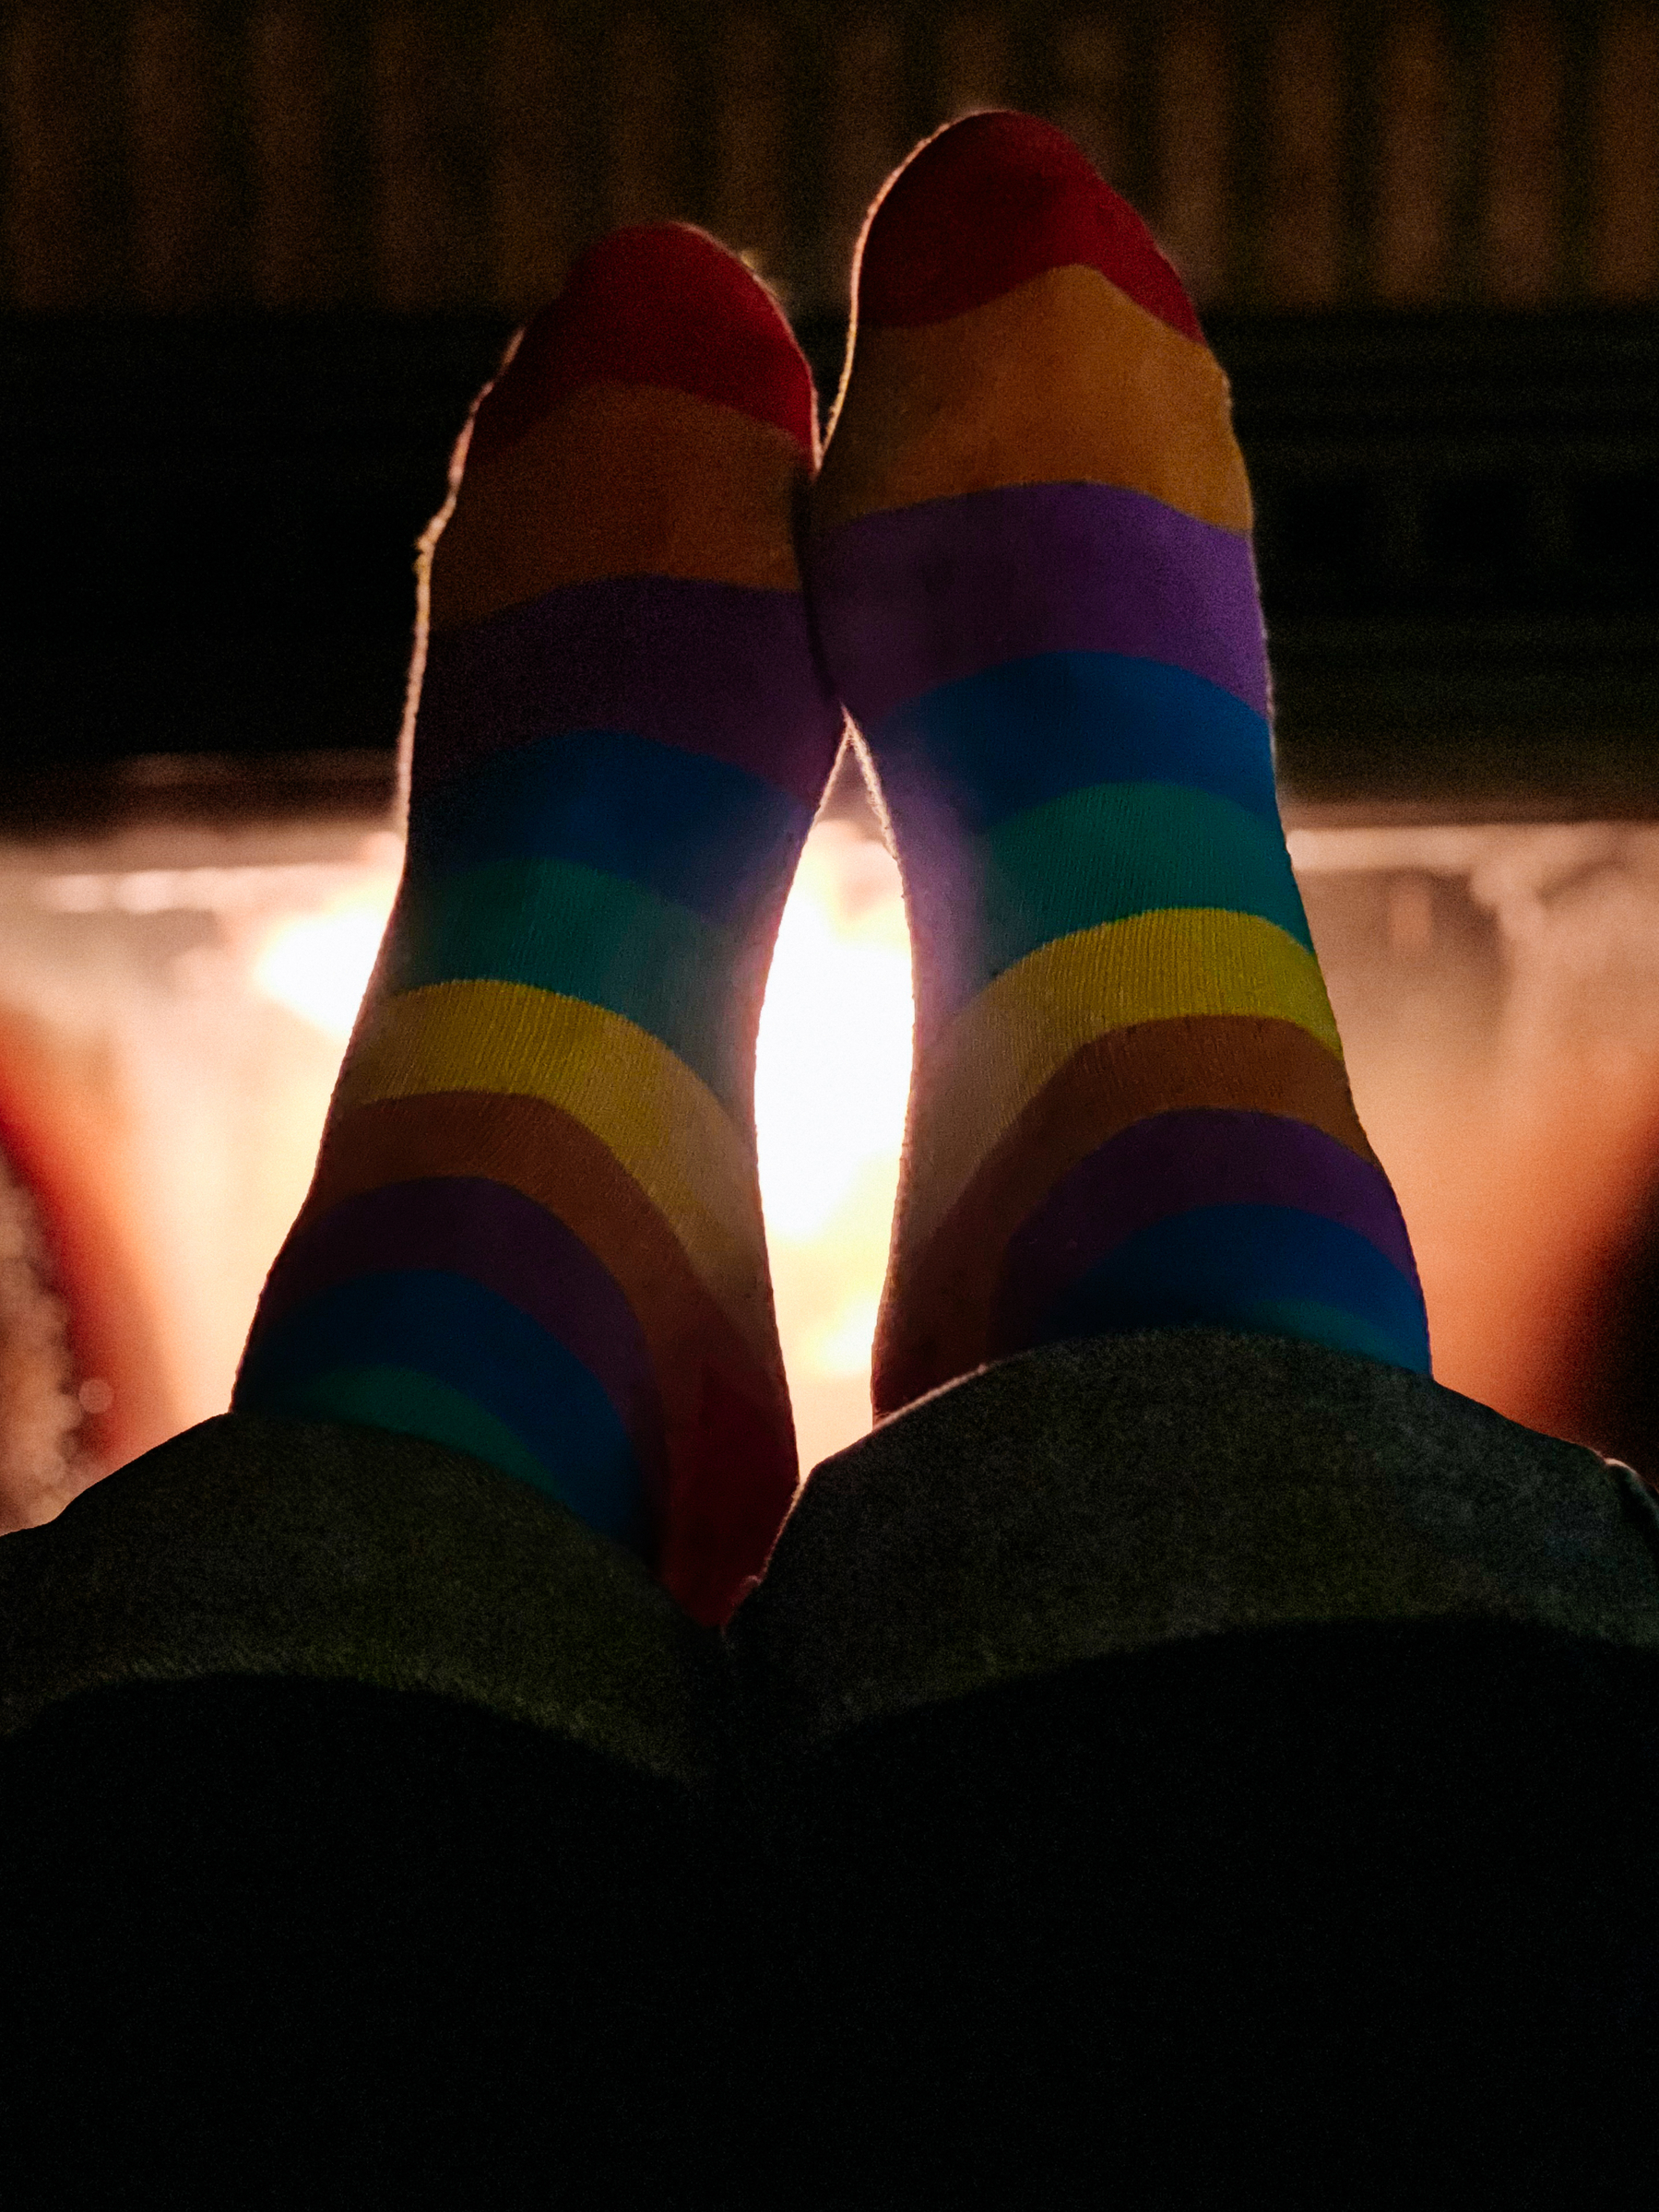 Rainbow socks by the fireplace.